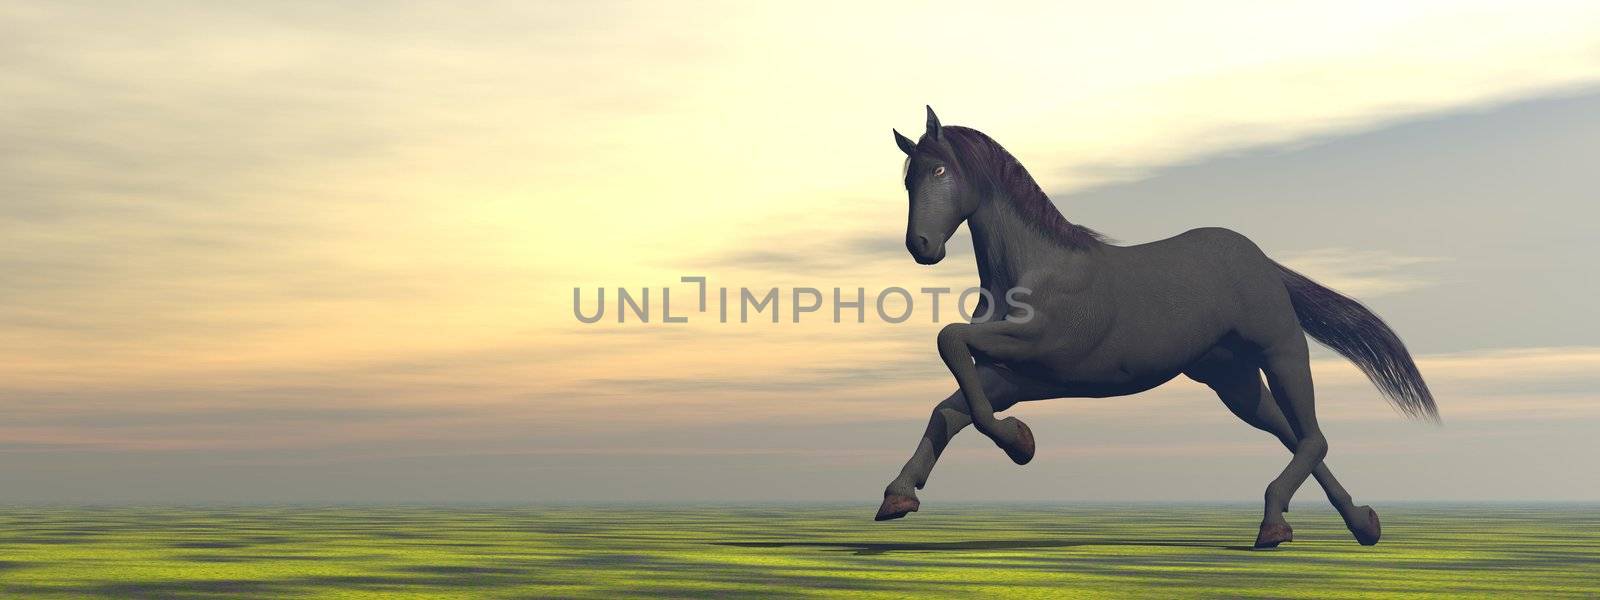 Horse running alone in thegrasslandt by sunset lights